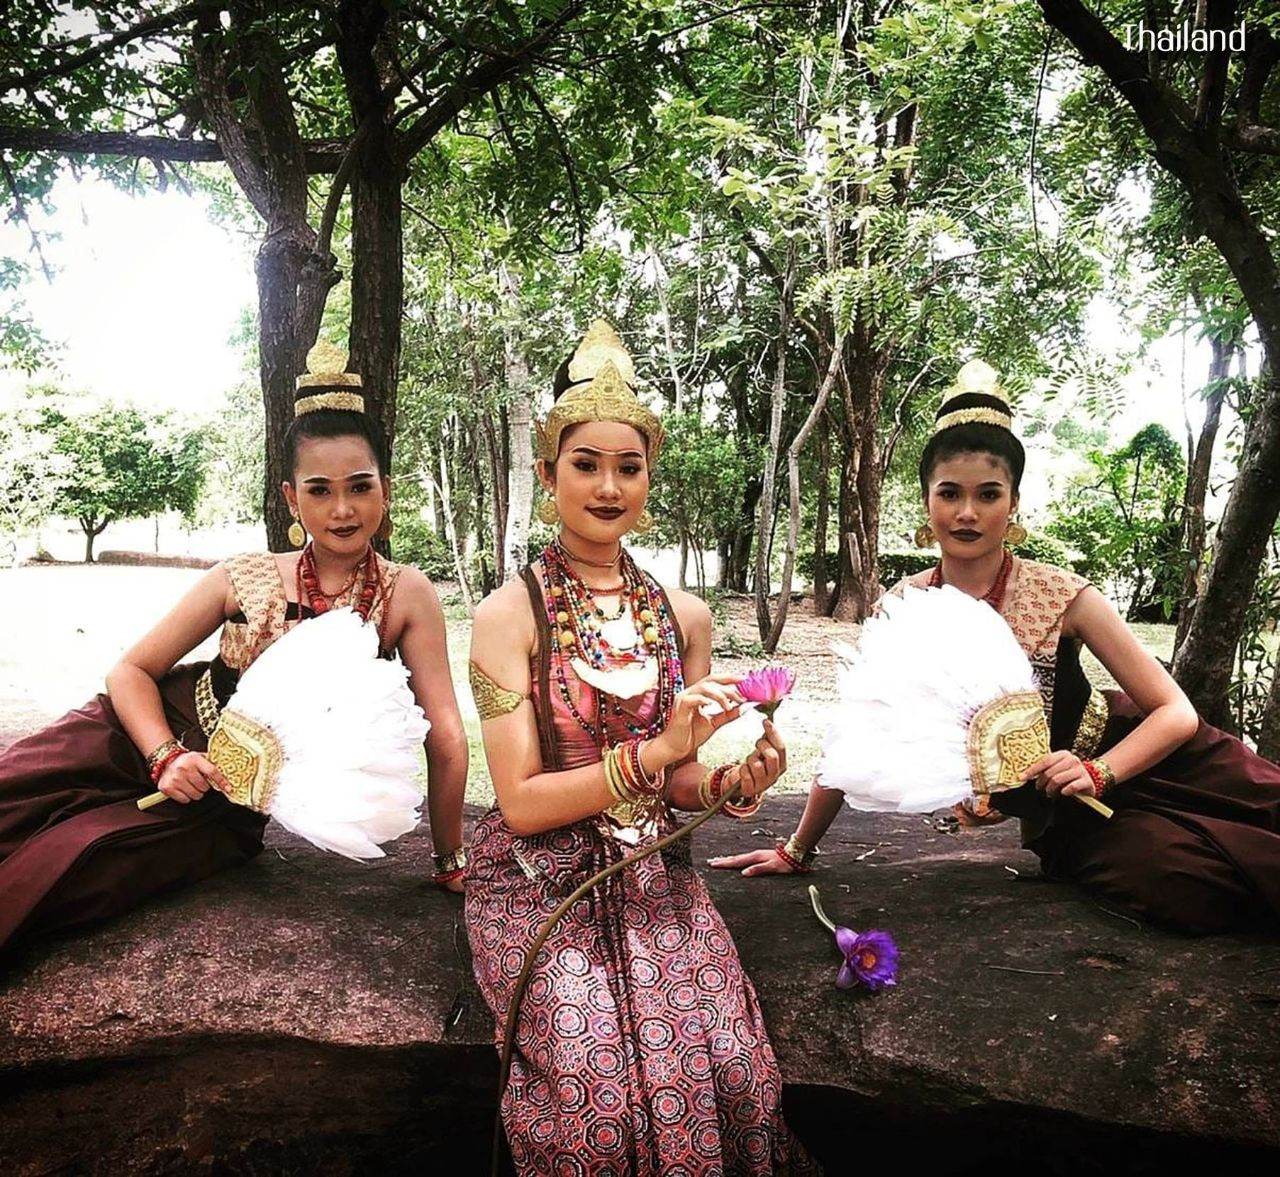 Dvaravati Era: การแต่งกายสมัยทวารวดี | THAILAND 🇹🇭